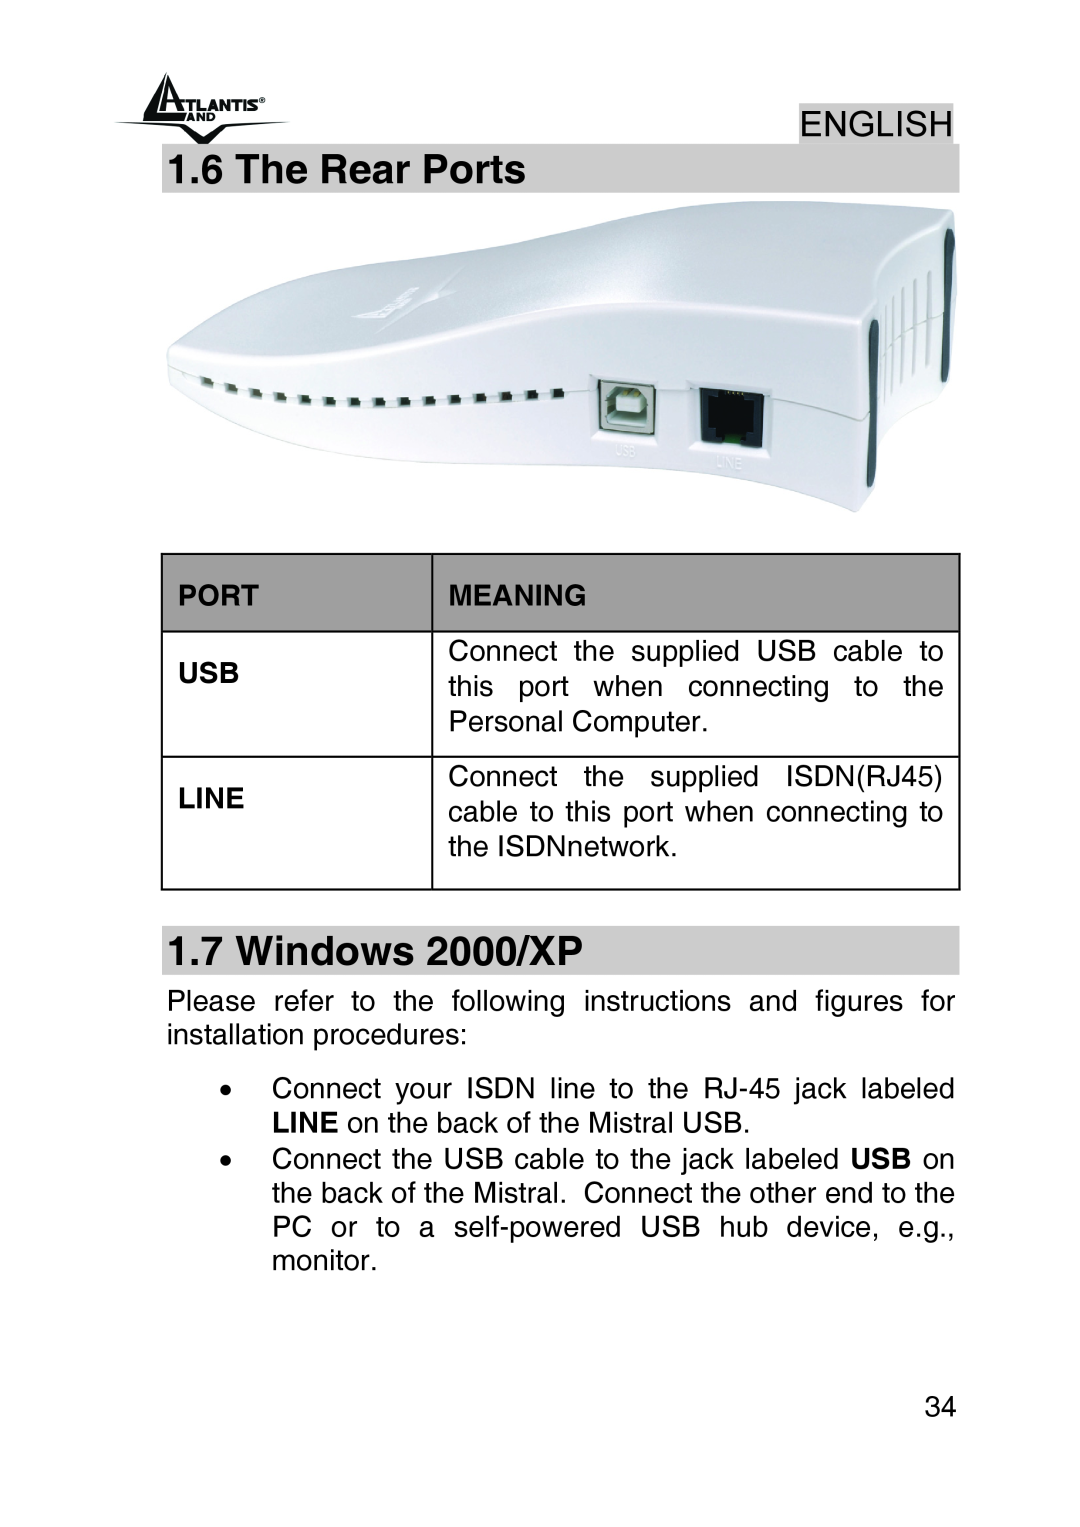 Atlantis Land A01-IU1 manual The Rear Ports, Windows 2000/XP, Meaning, Line 